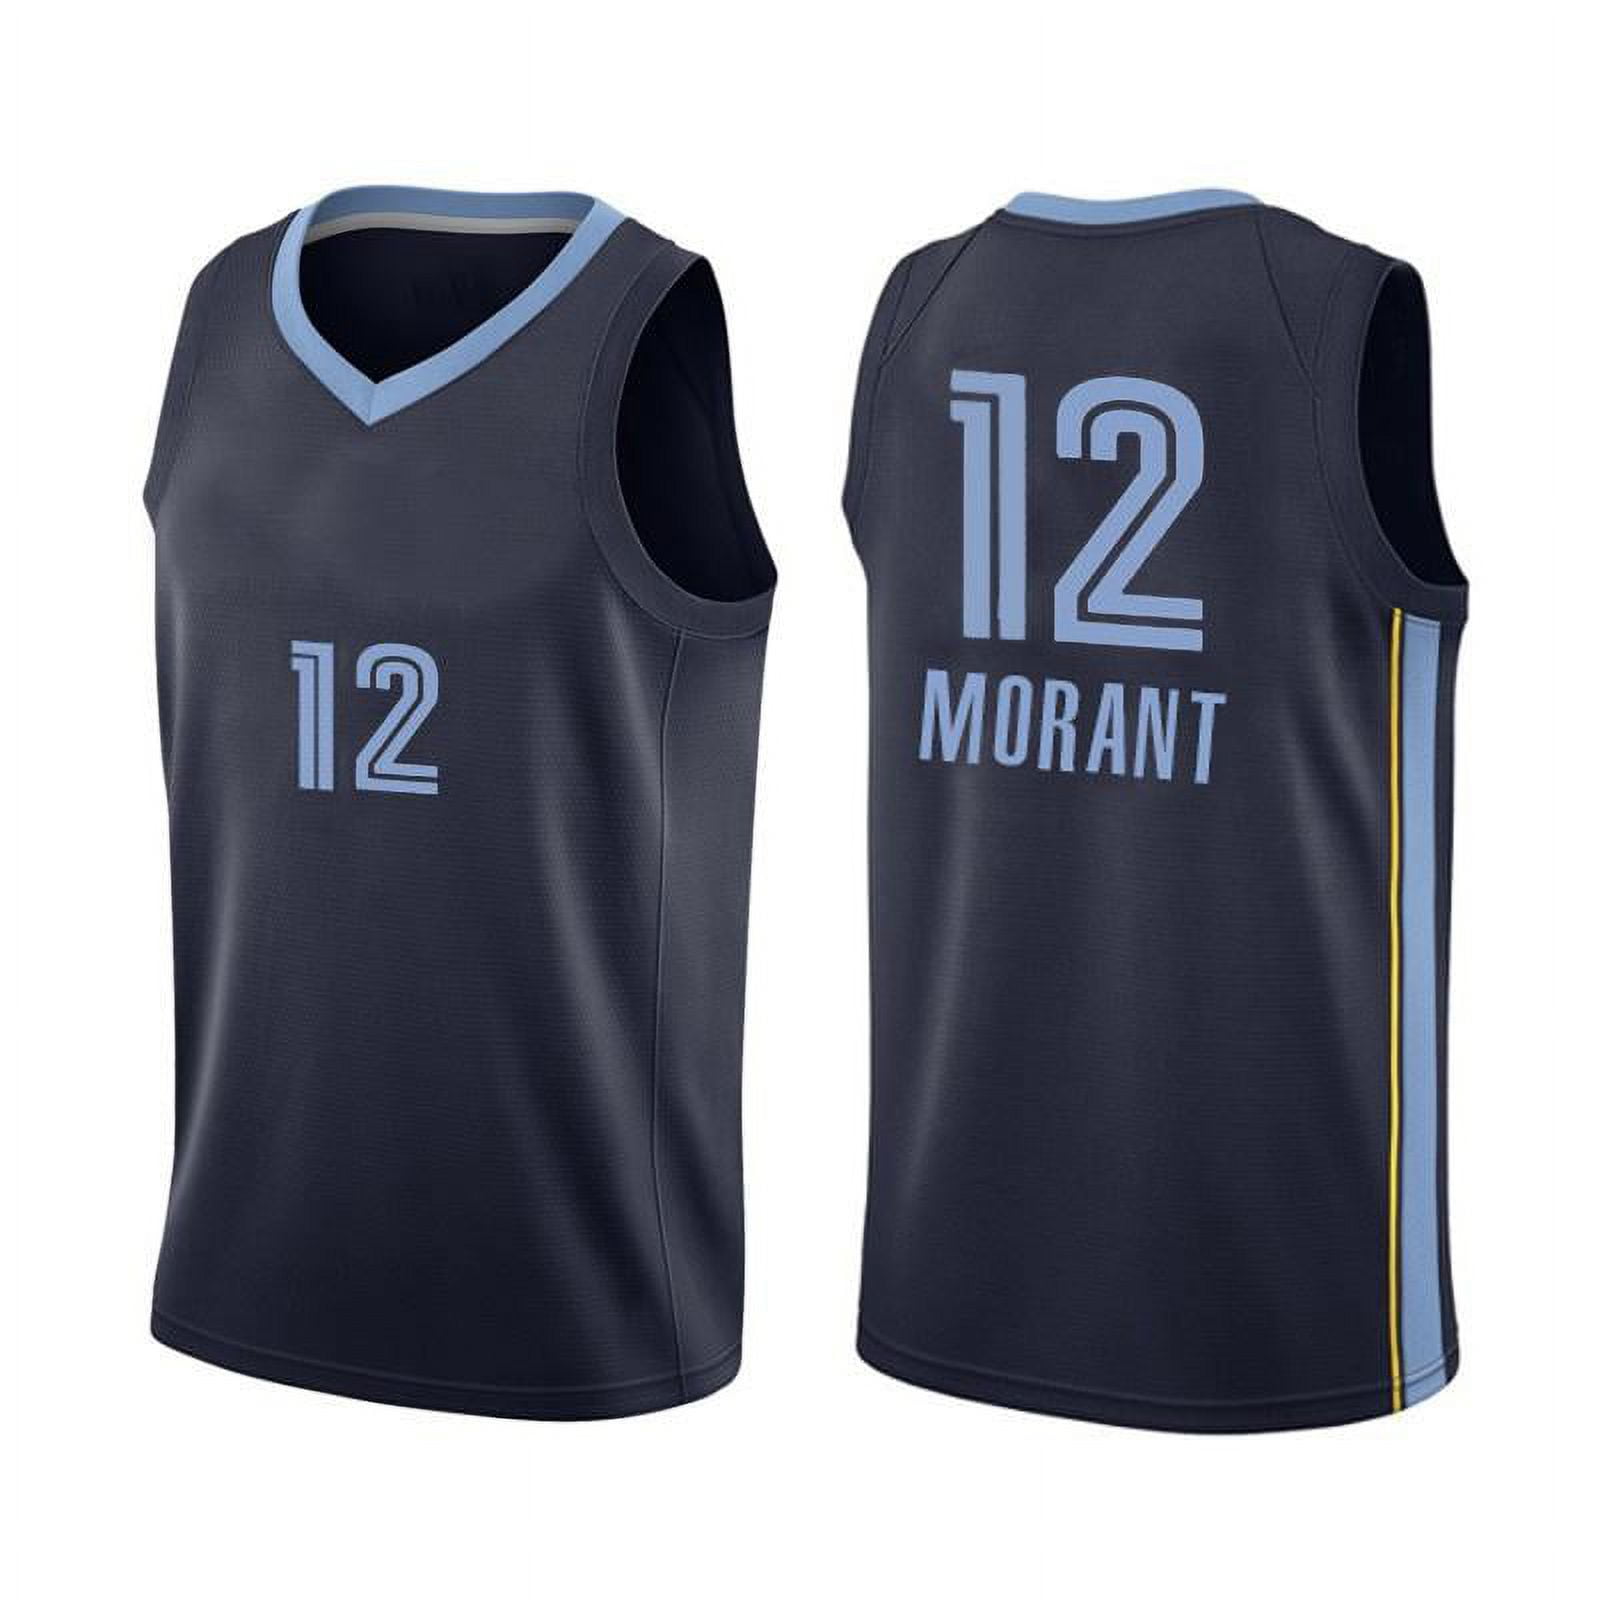 Ja Morant among the top NBA jersey sellers